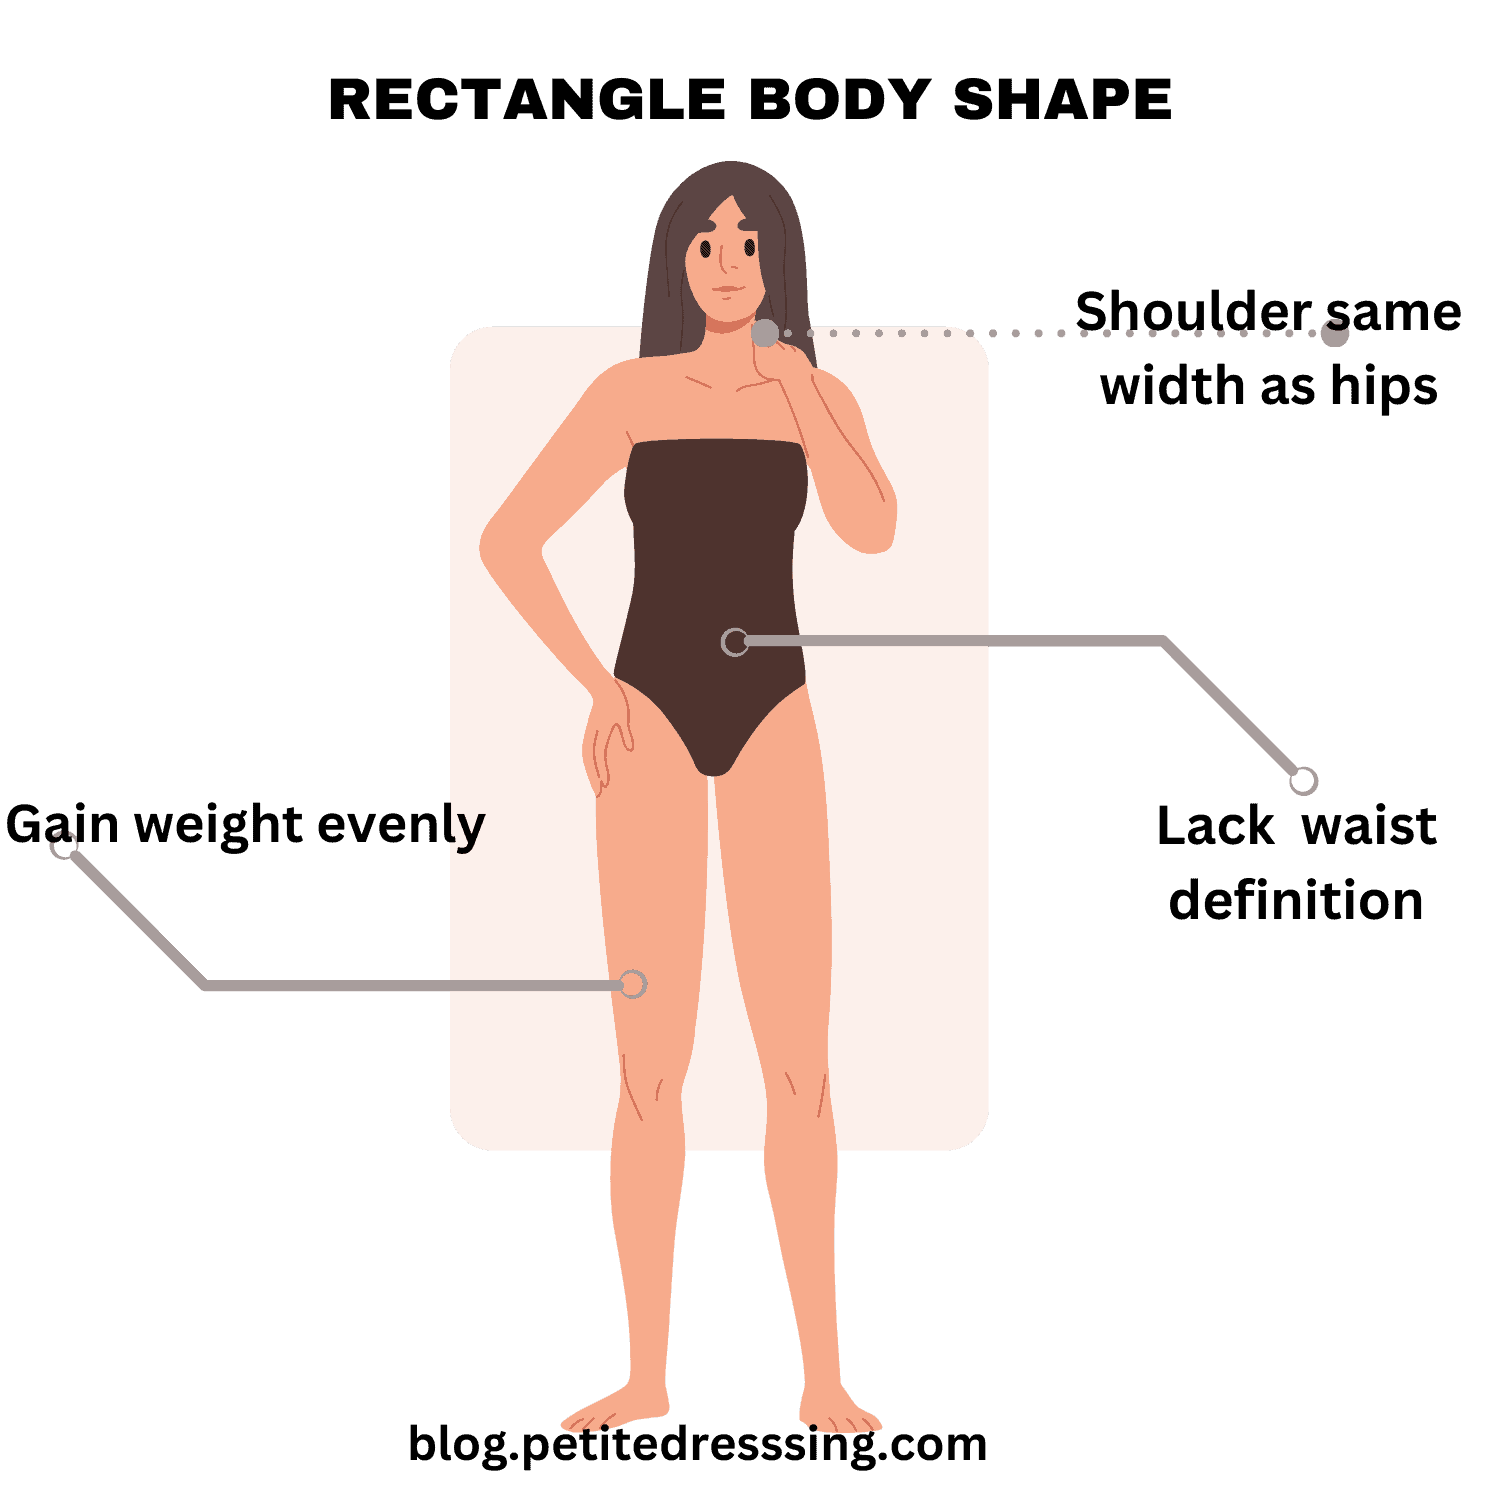 Rectangle Body Shape: A Comprehensive Guide